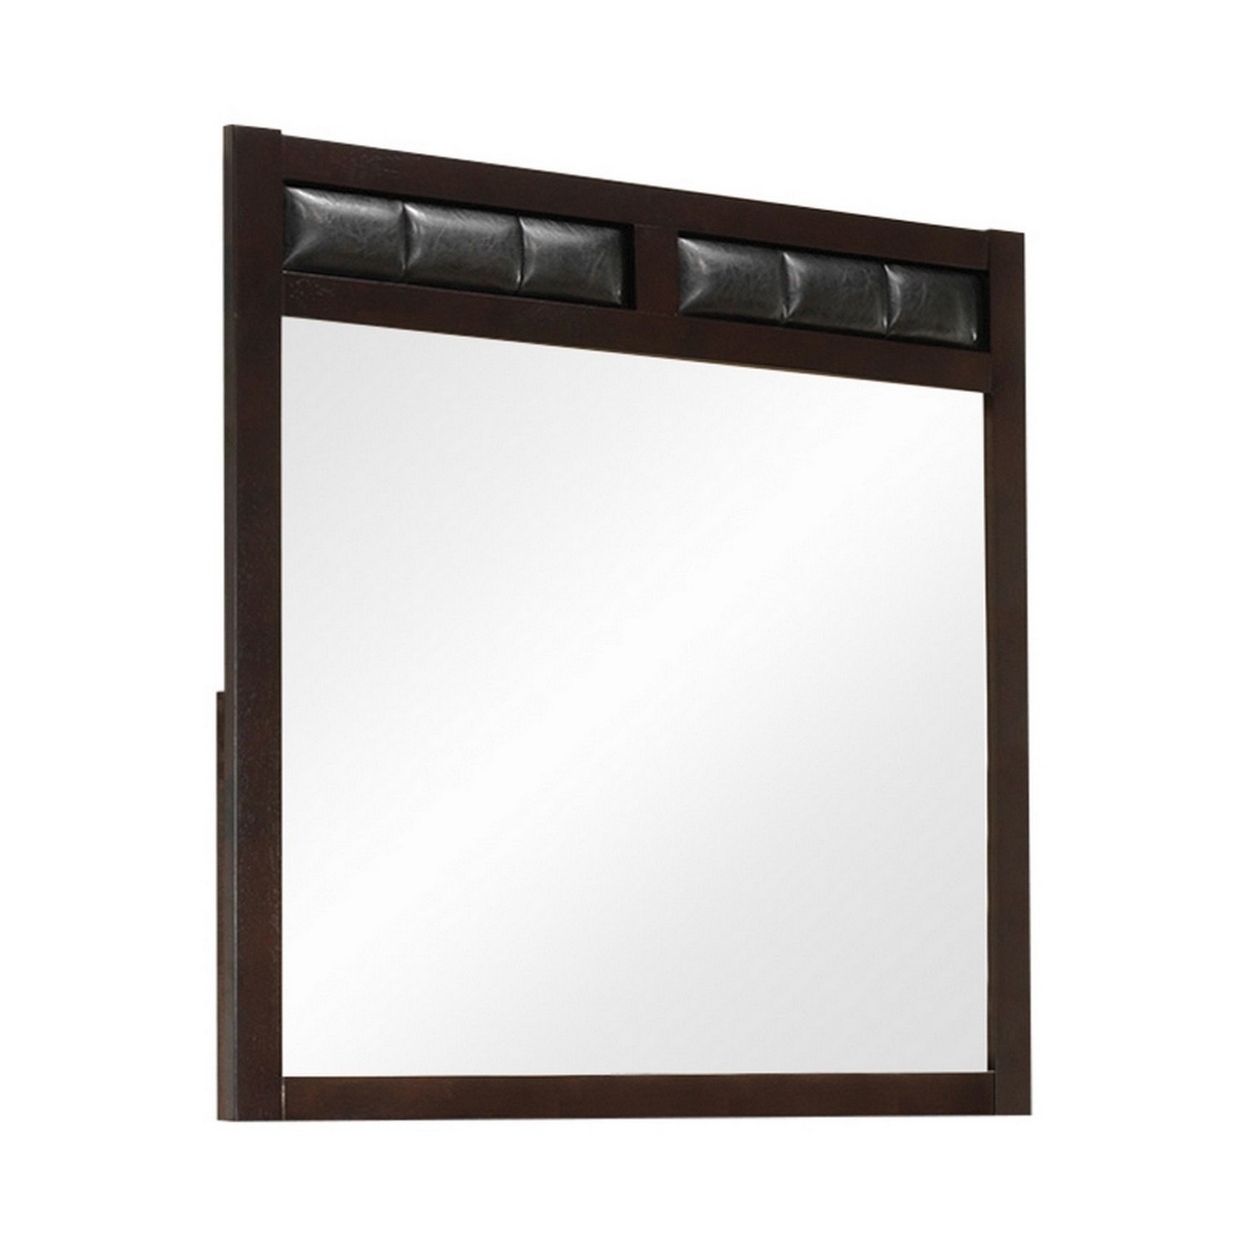 Rectangular Wooden Frame Mirror With Leatherette Panels, Brown- Saltoro Sherpi